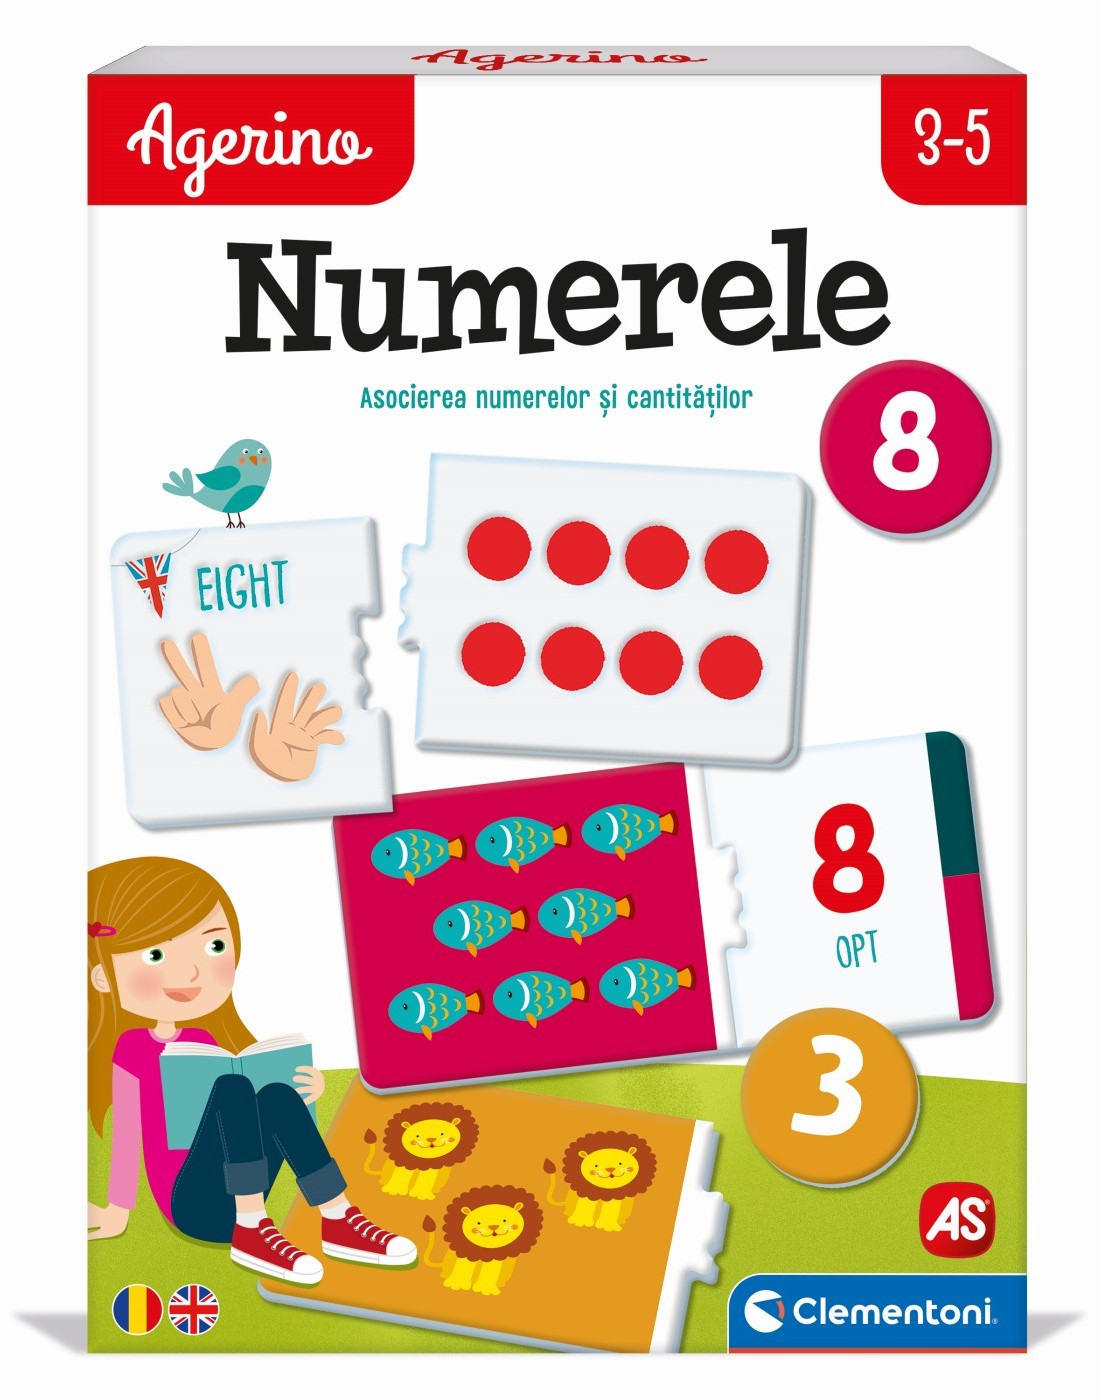 Puzzle educativ - Agerino - Numerele | Clementoni - 5